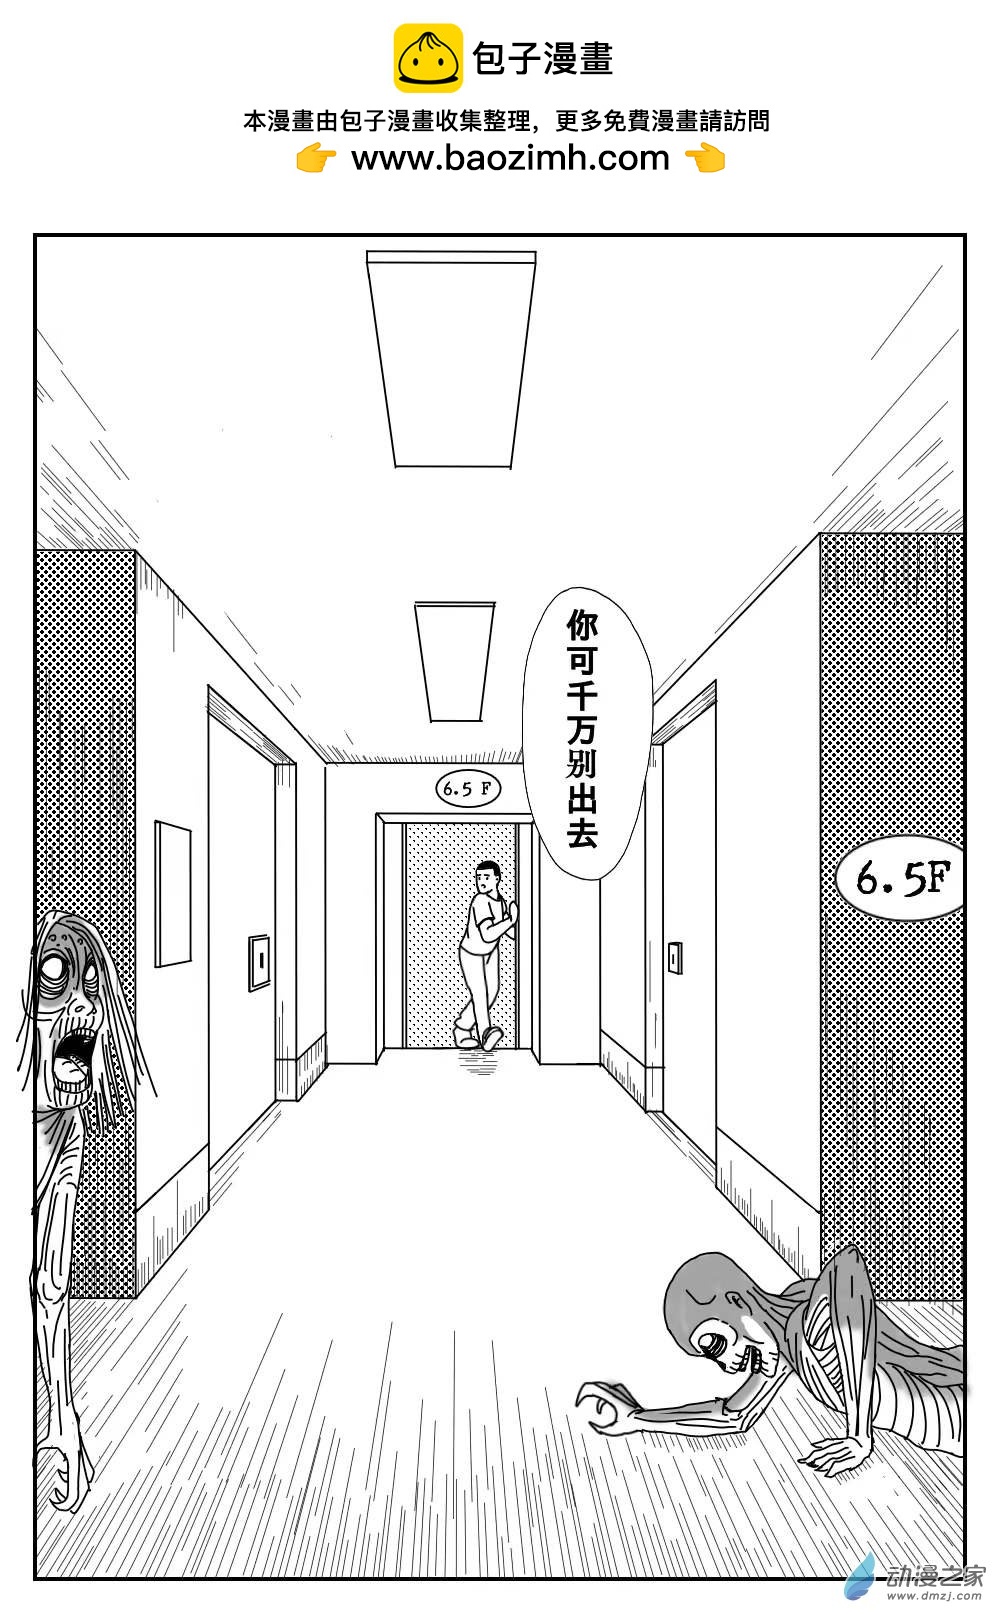 K神的短篇漫畫集 - 02 道格先生 - 2